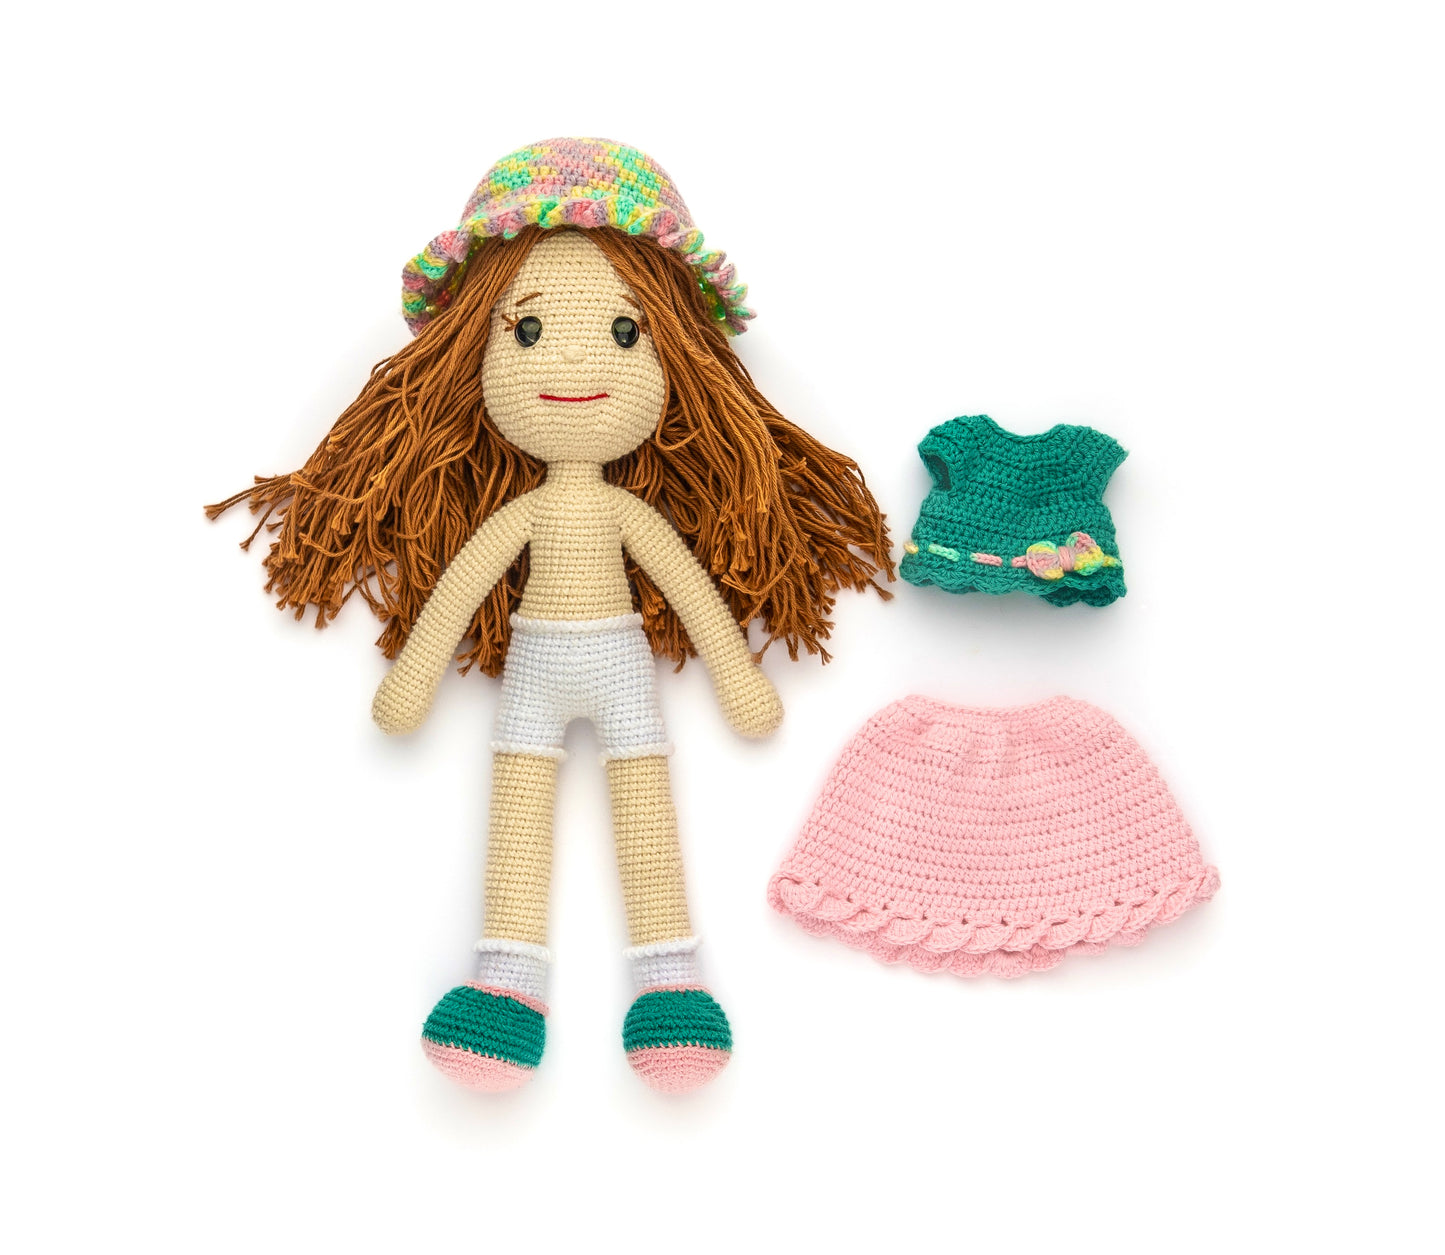 Crochet Doll "Lindsay"